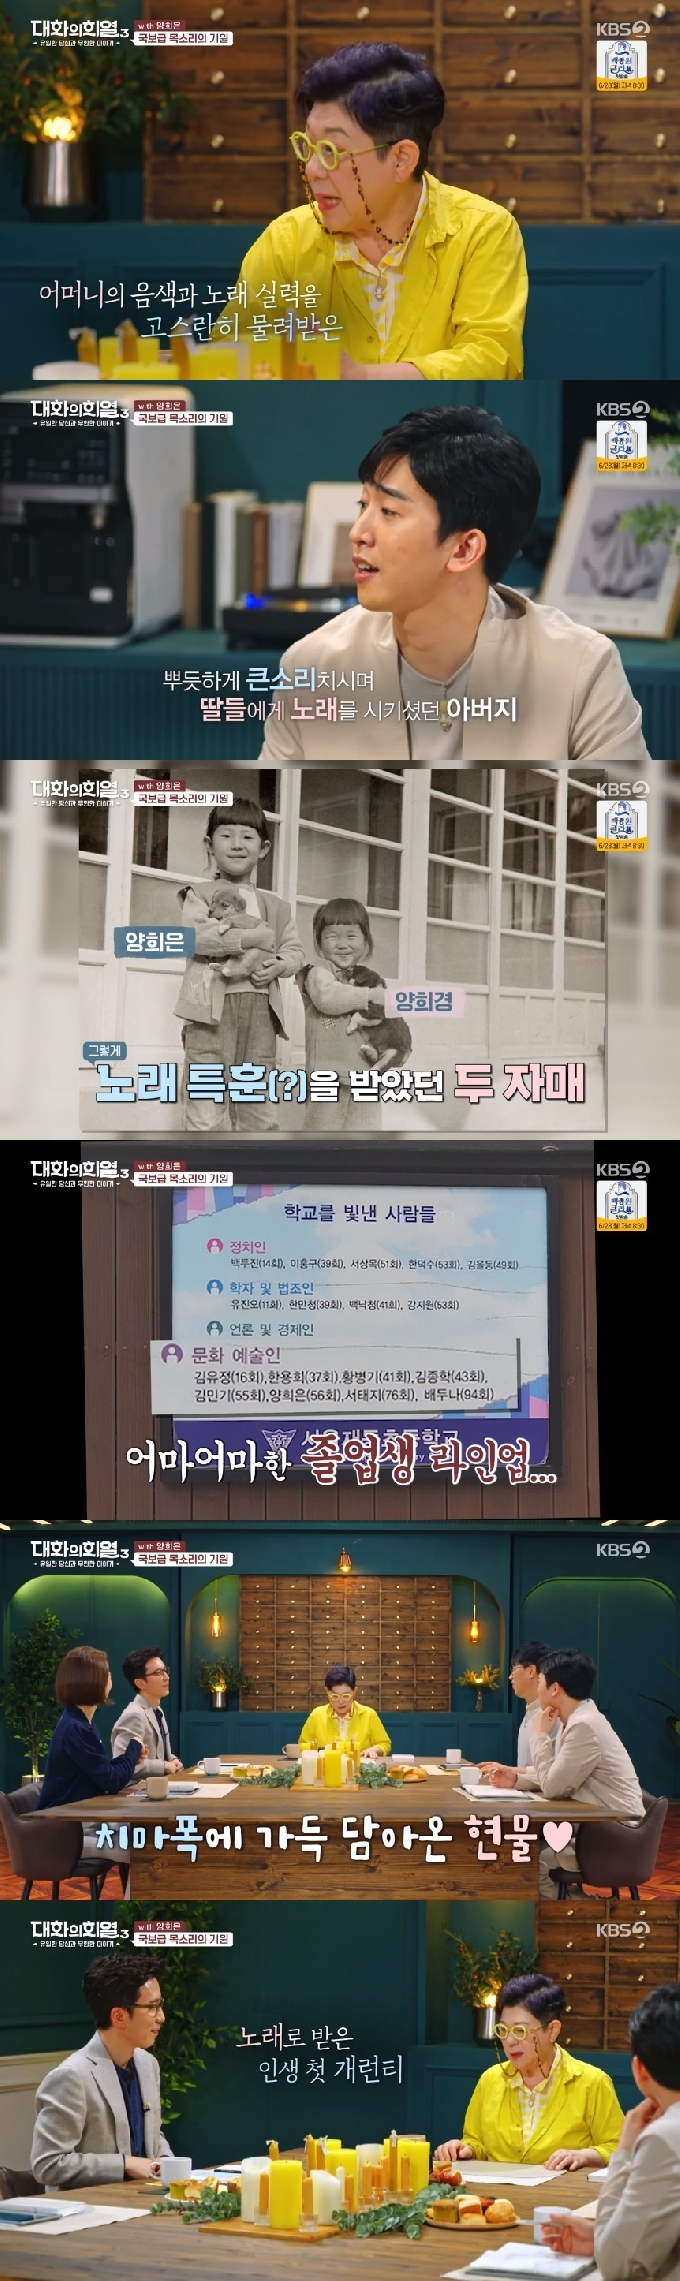 KBS 2TV '대화의 희열 3' 캡처 © 뉴스1